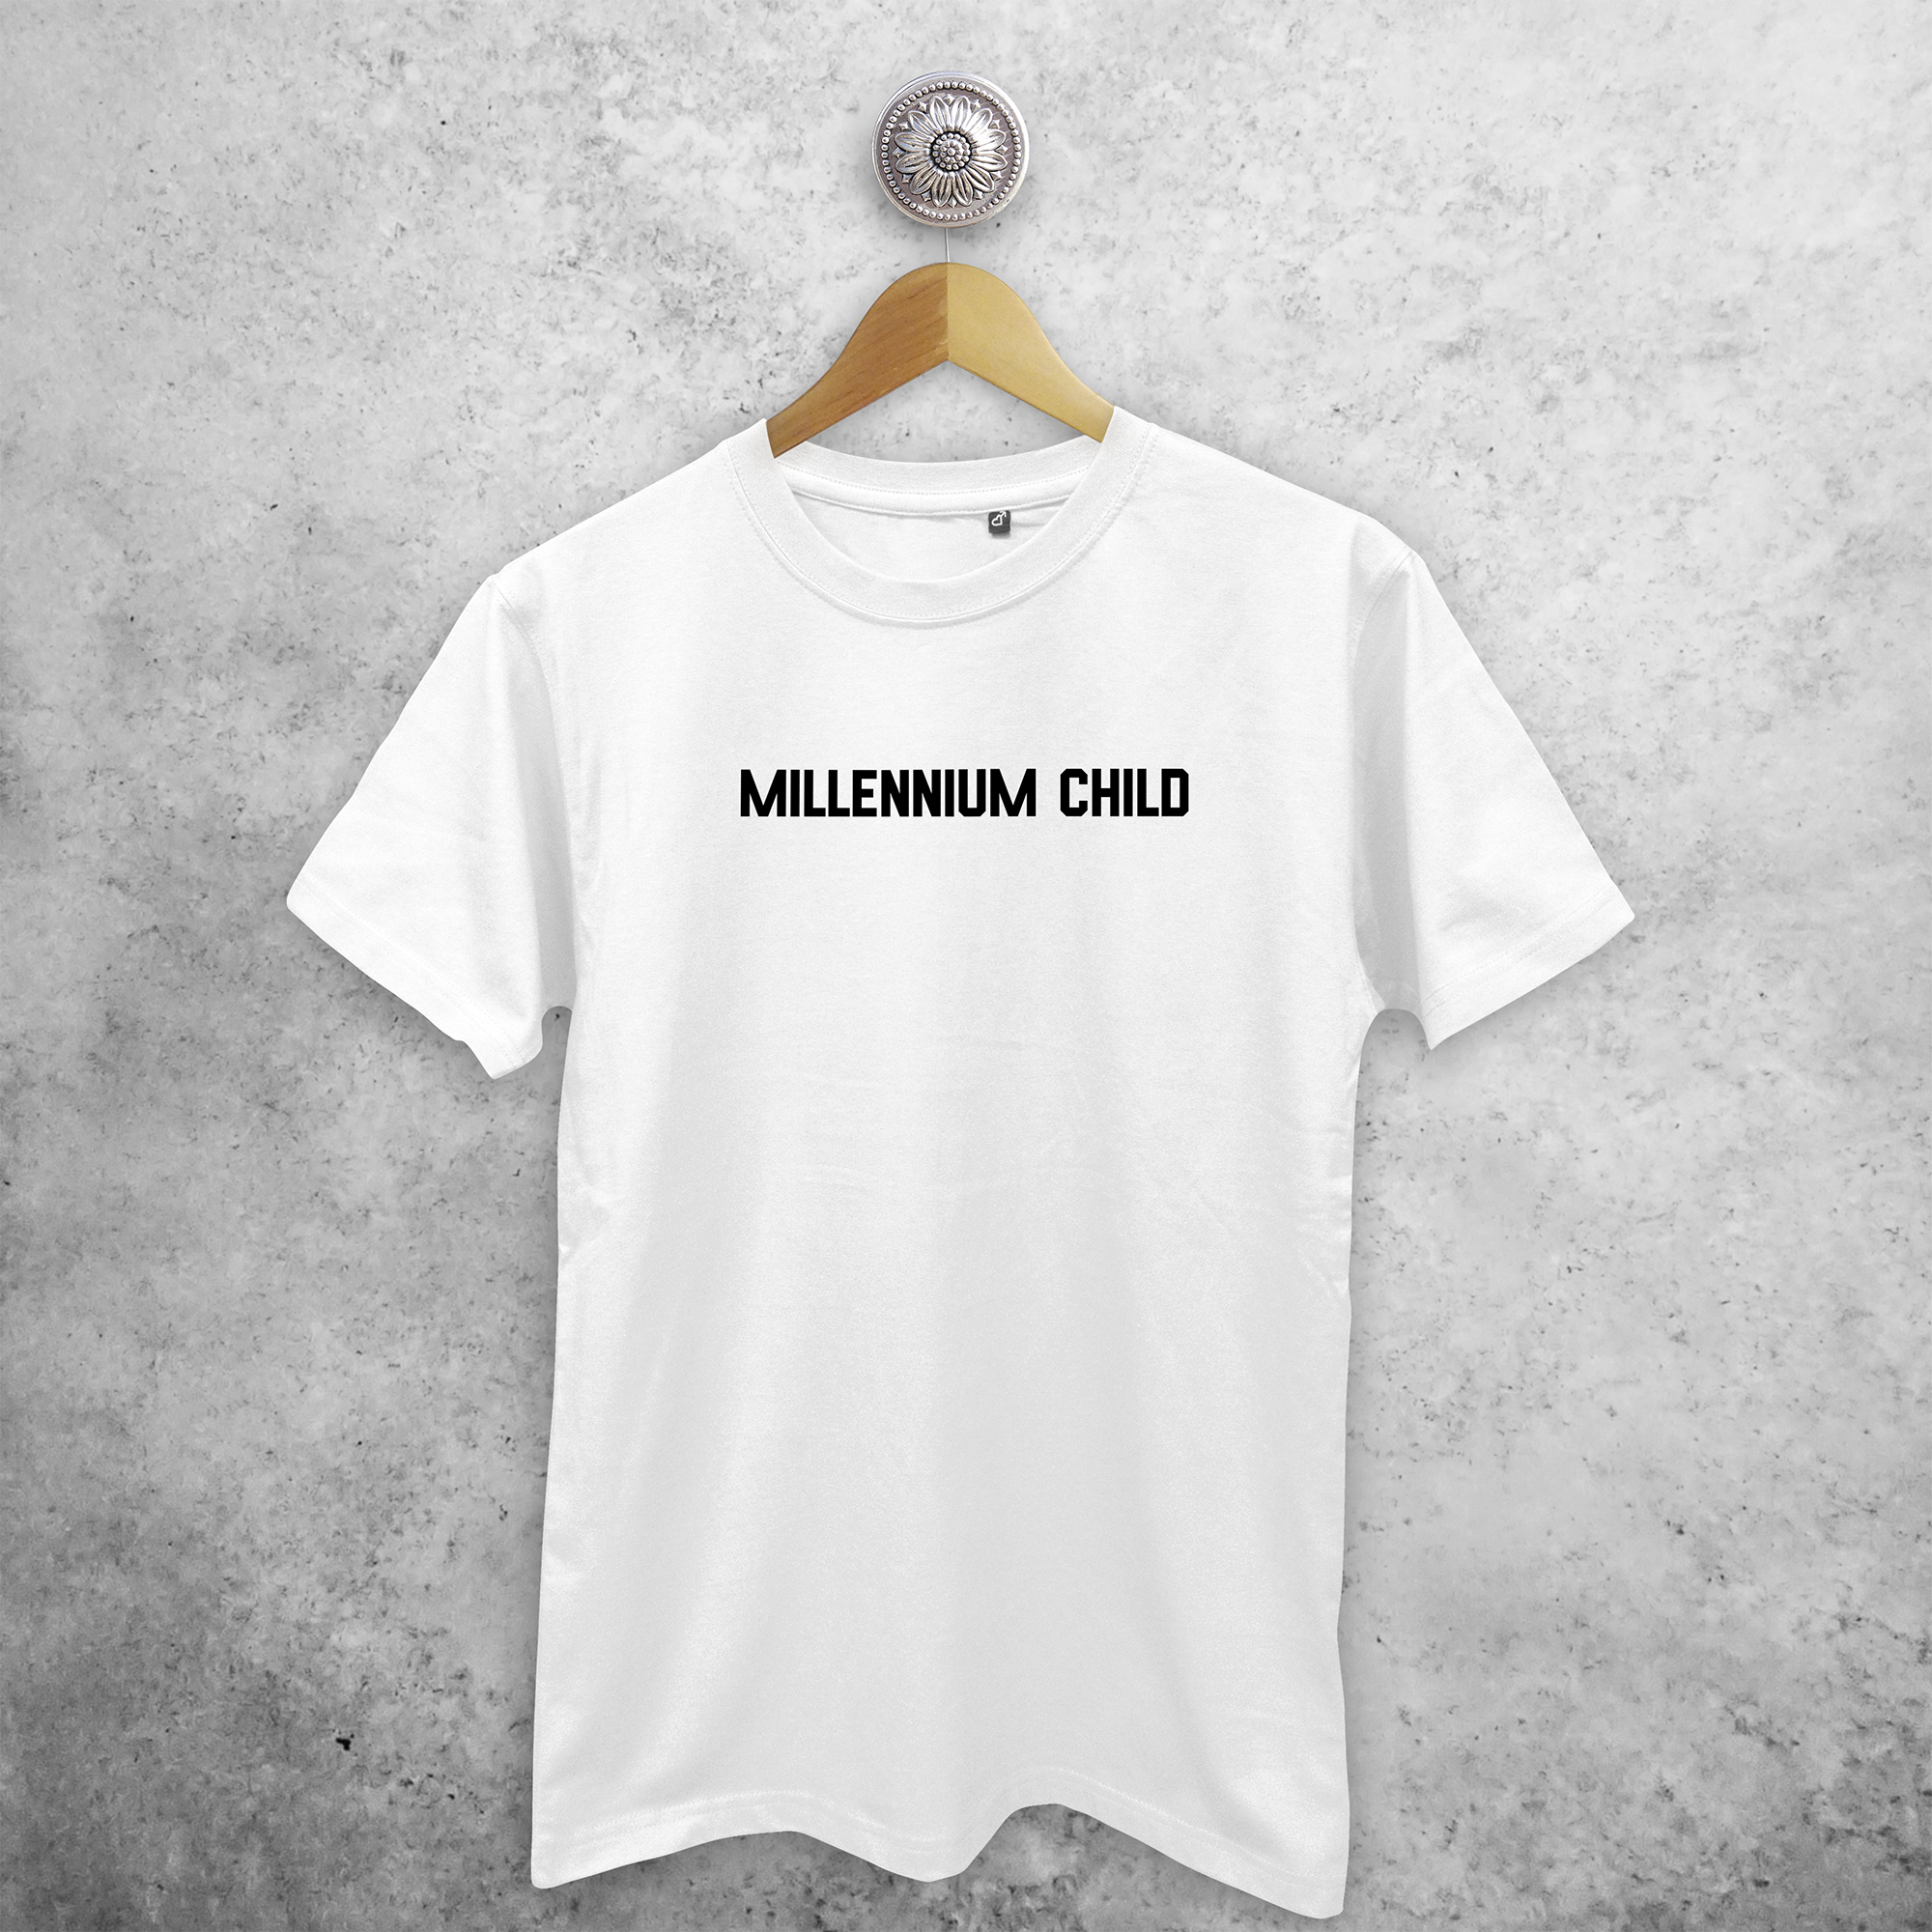 'Millennium child' adult shirt